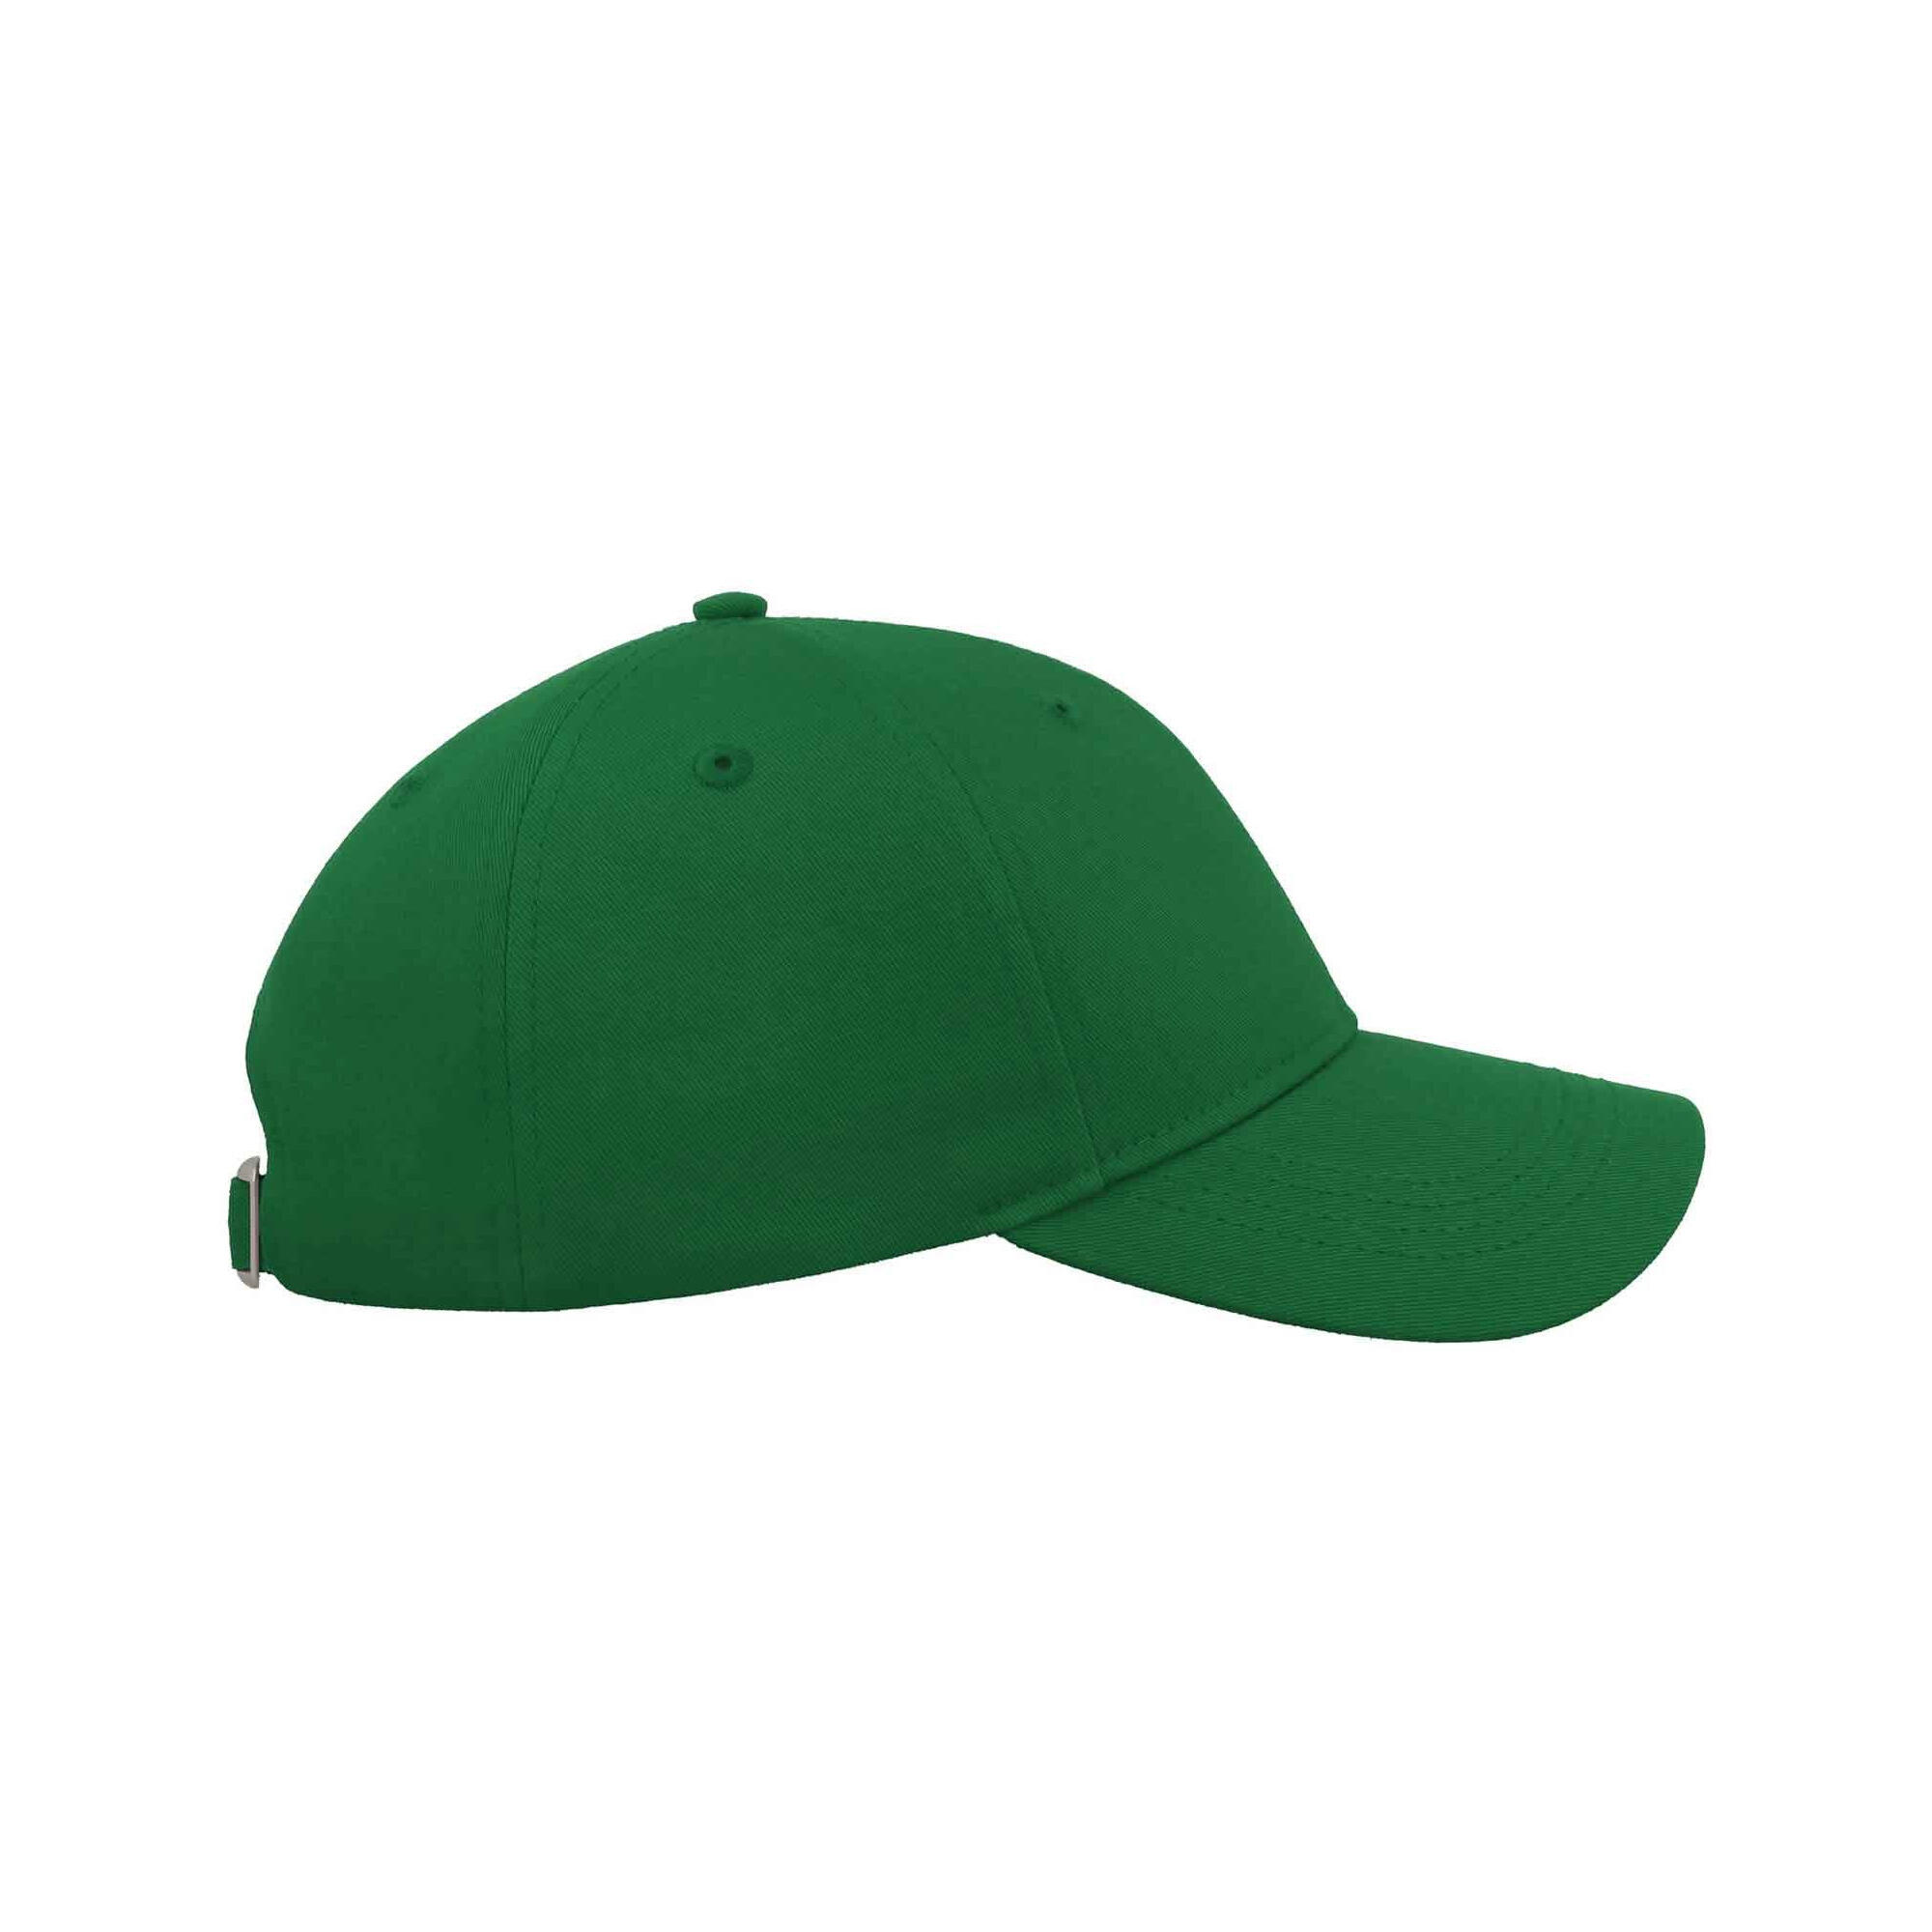 Unisex Adult Curved Twill Baseball Cap (Green) 3/3